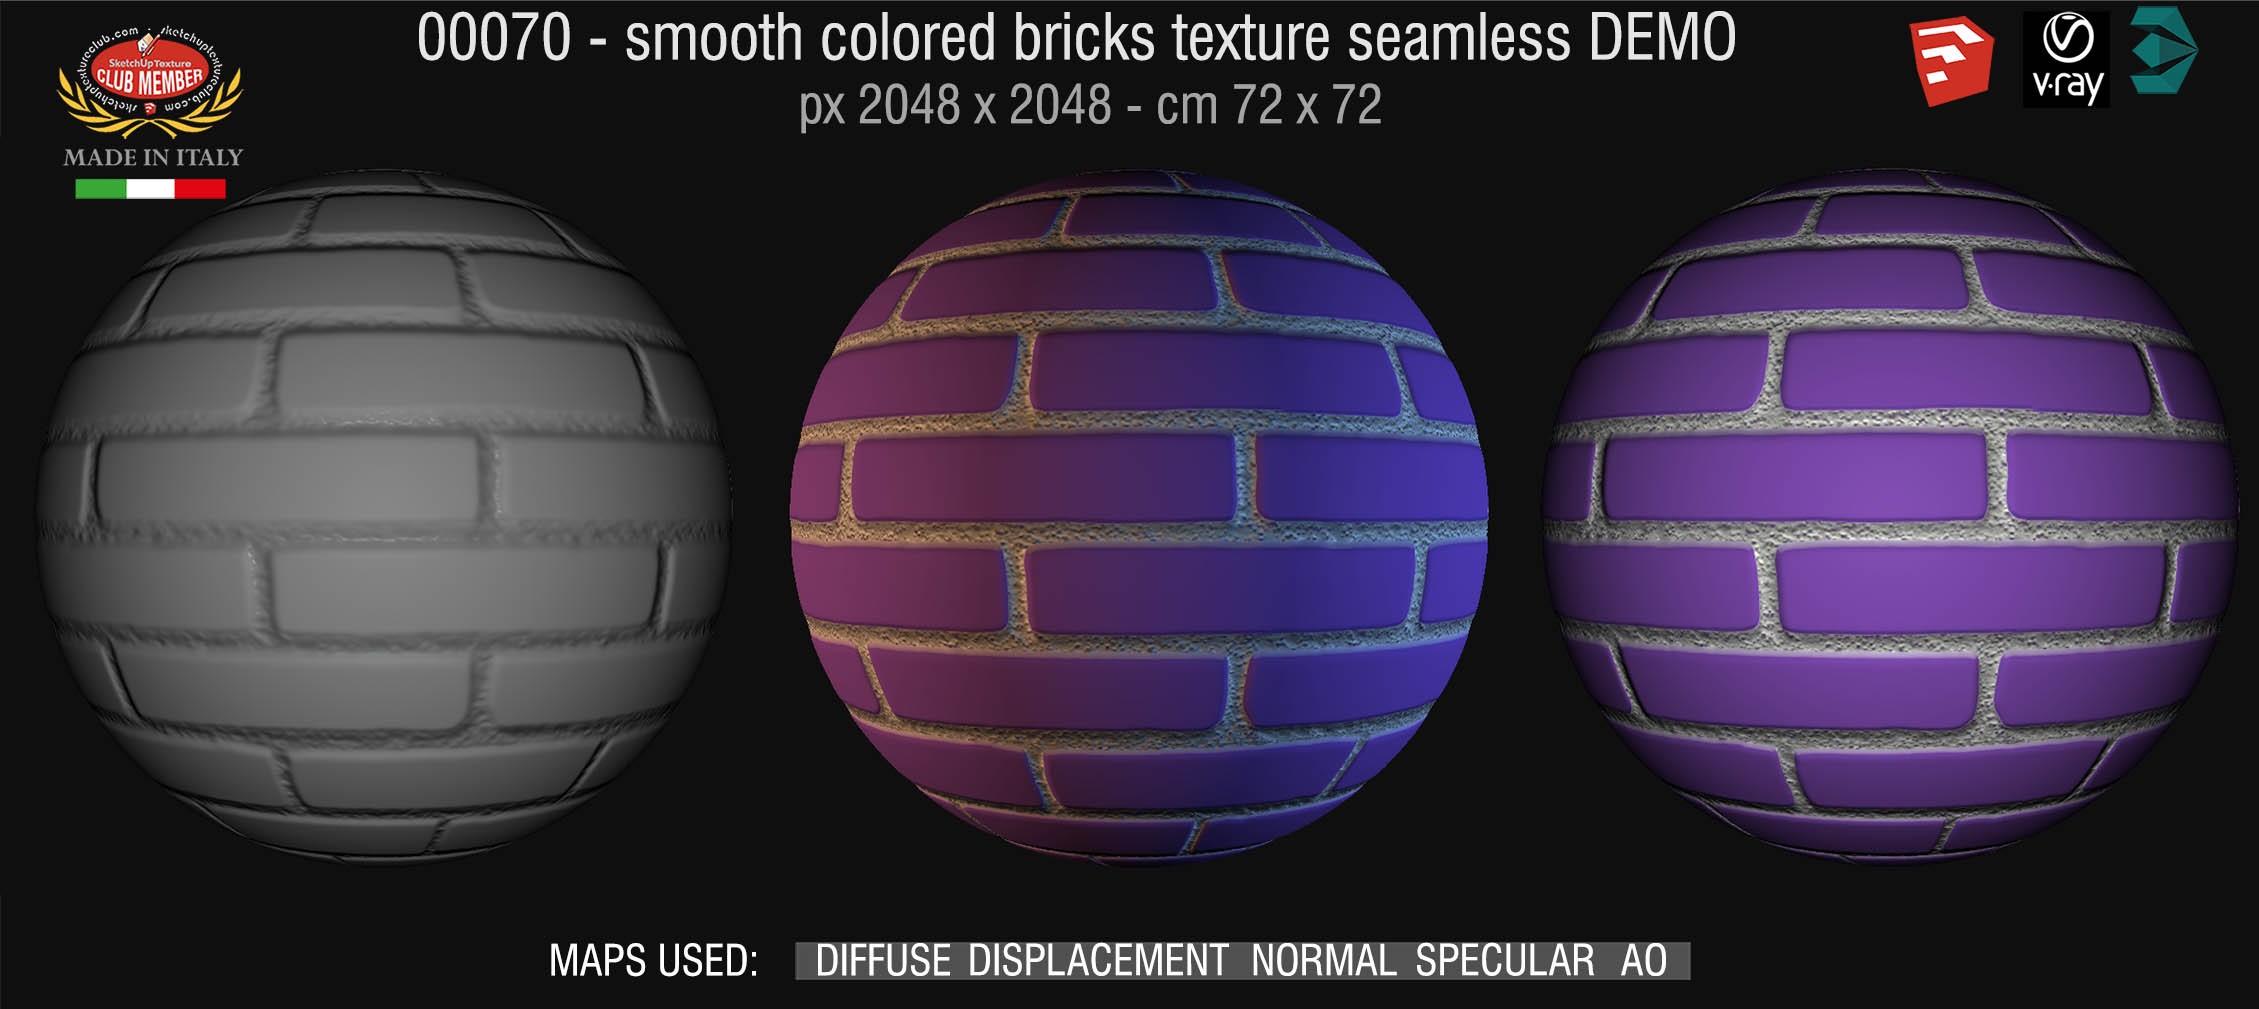 00070 smooth colored bricks texture seamless + maps DEMO